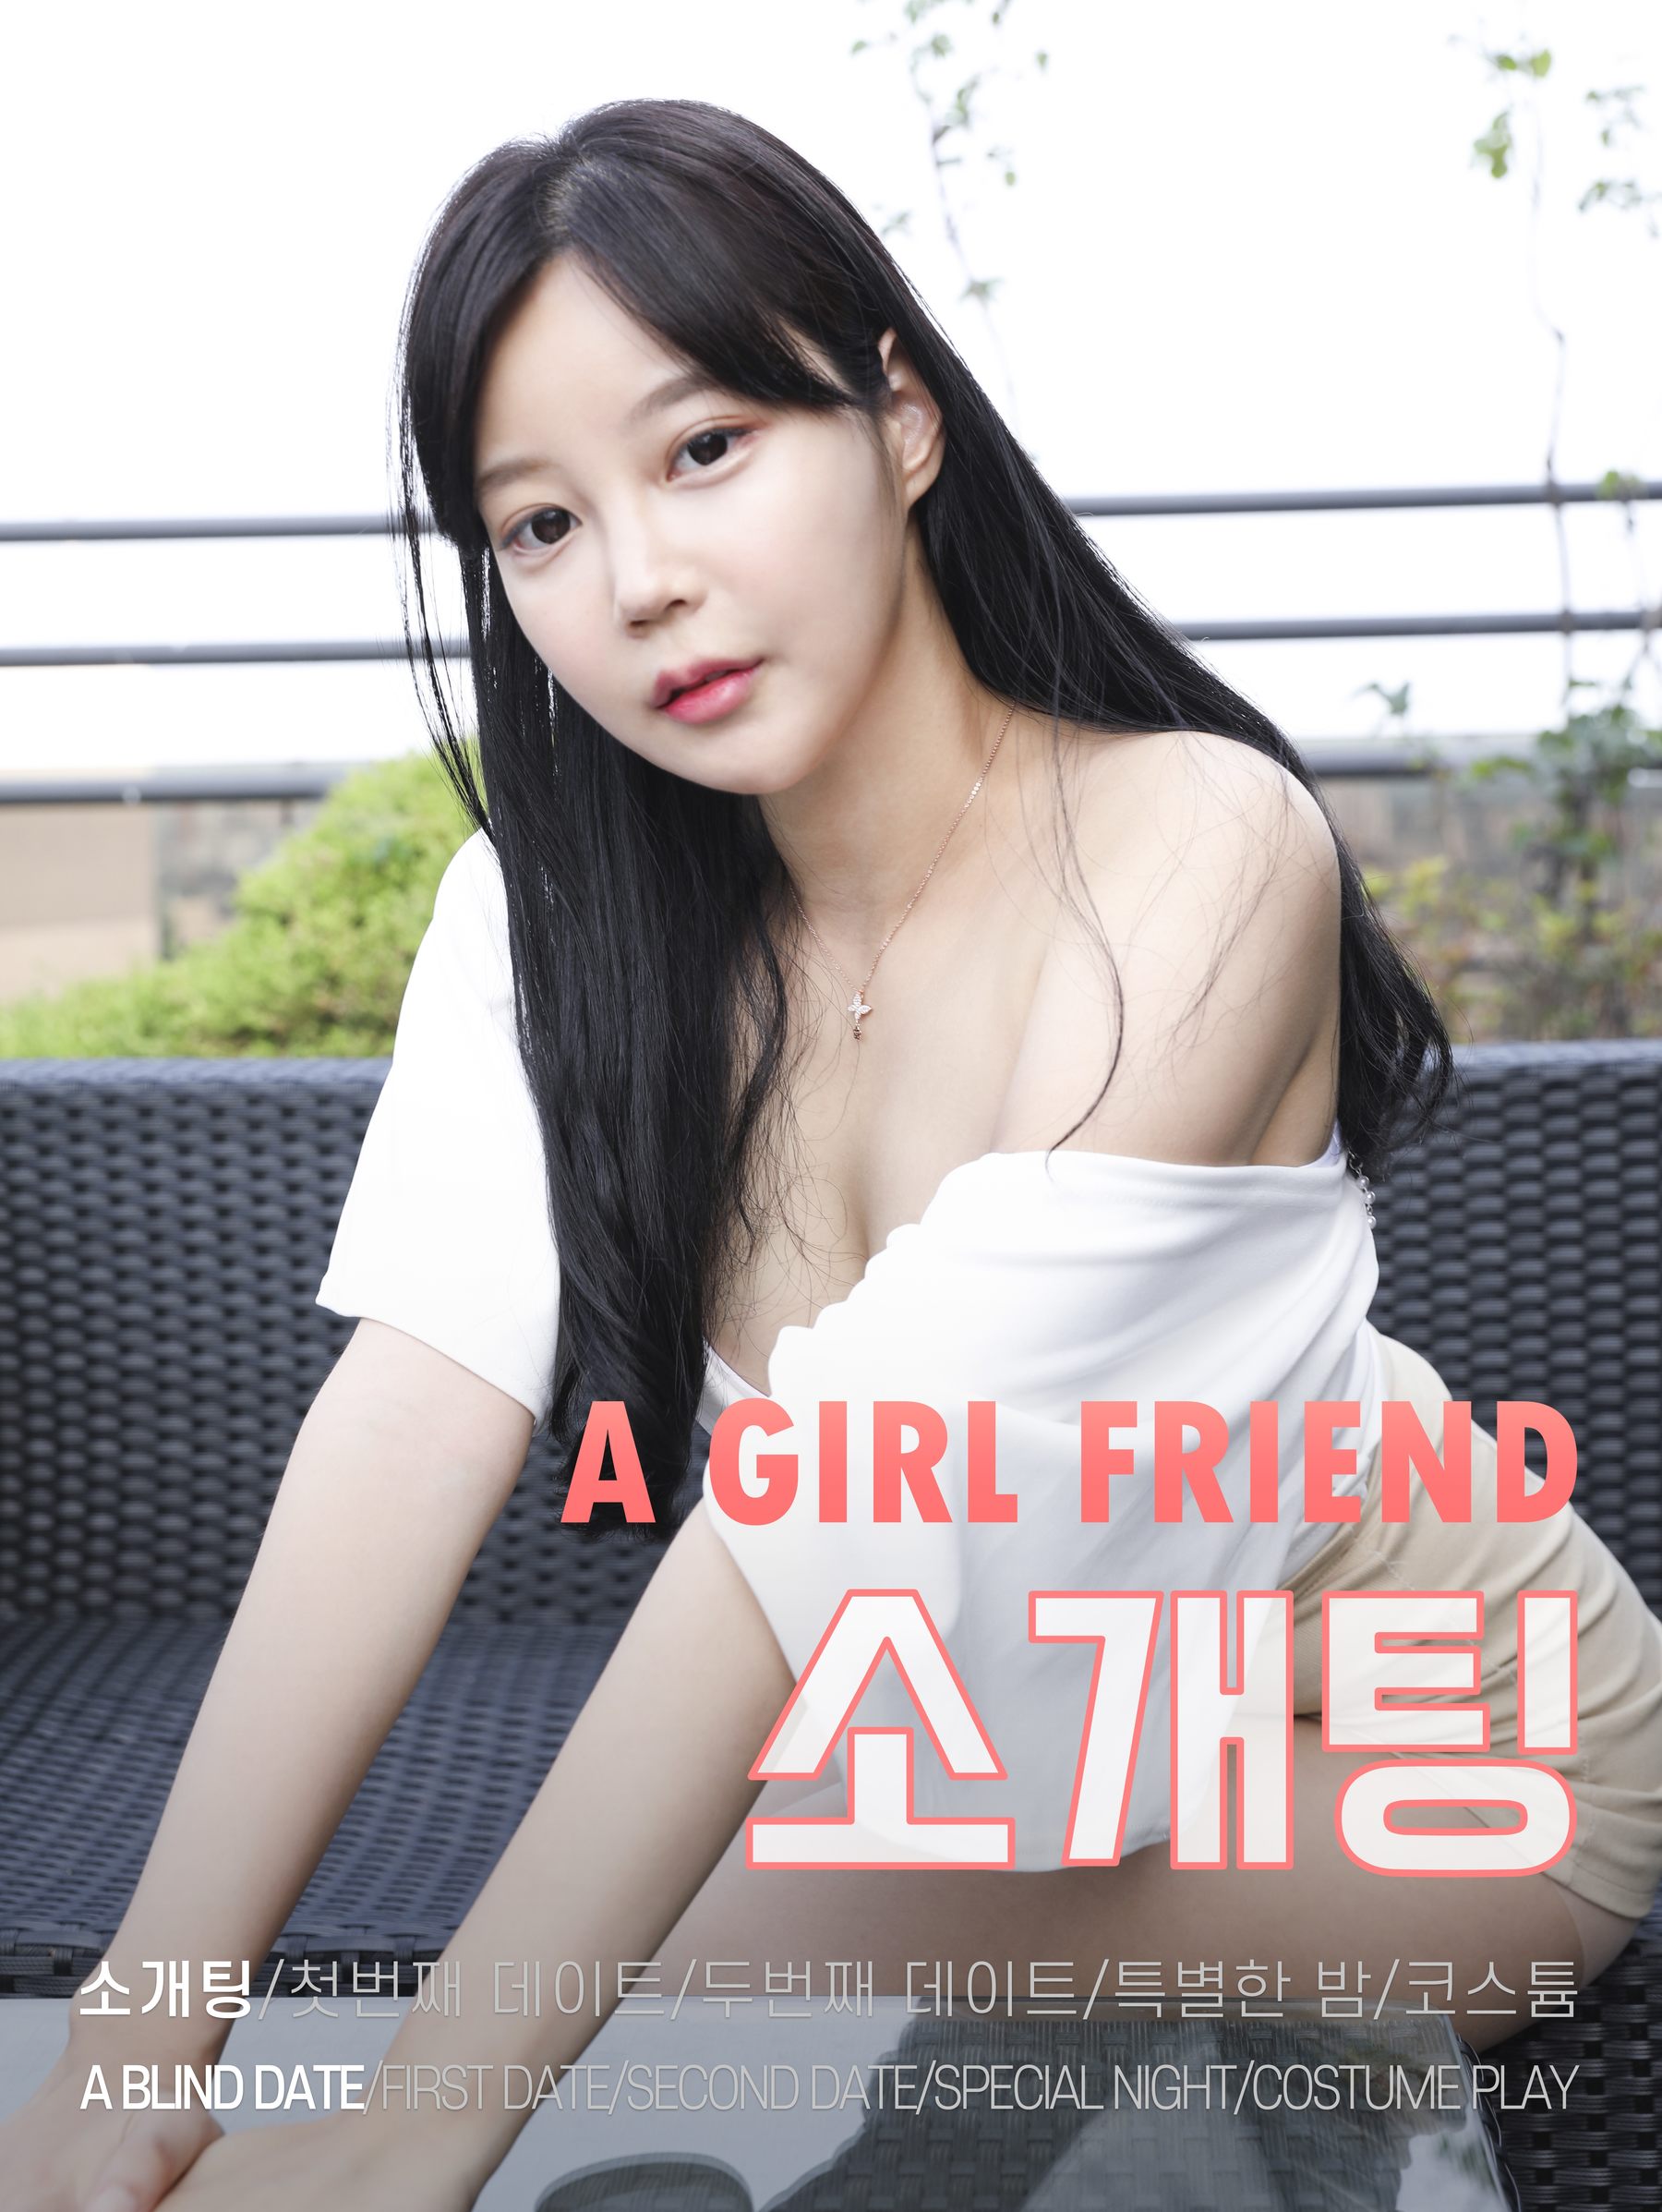 [BUNNY] Joo Yeon - A girl friend S.1 A blind date1